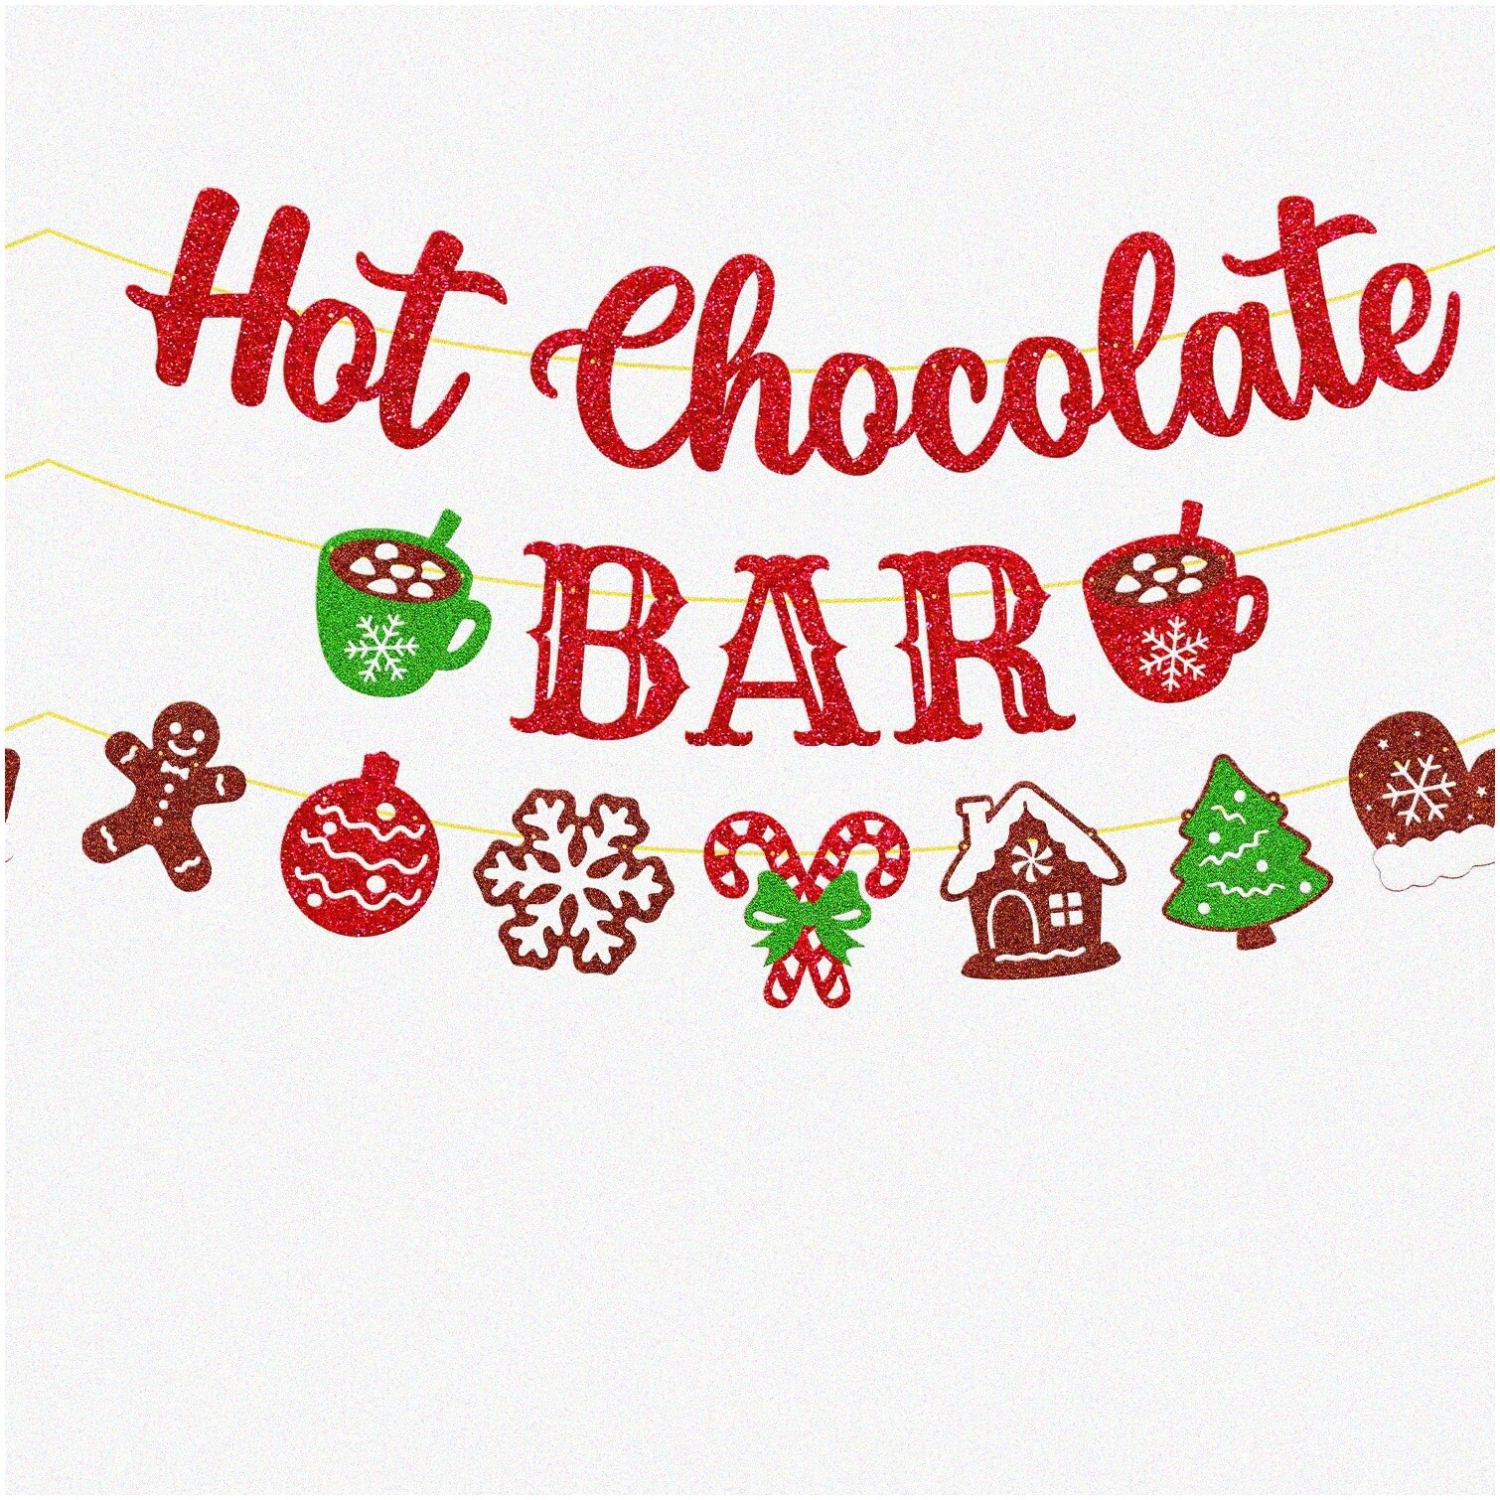 Celestial Celebration: Nativity Snowflake Garland & Hot Chocolate Bar Banner - A Joyful Christmas & New Year Party Backdrop for Religious Holiday Themes, Jesus, God, Snowman, & Mor